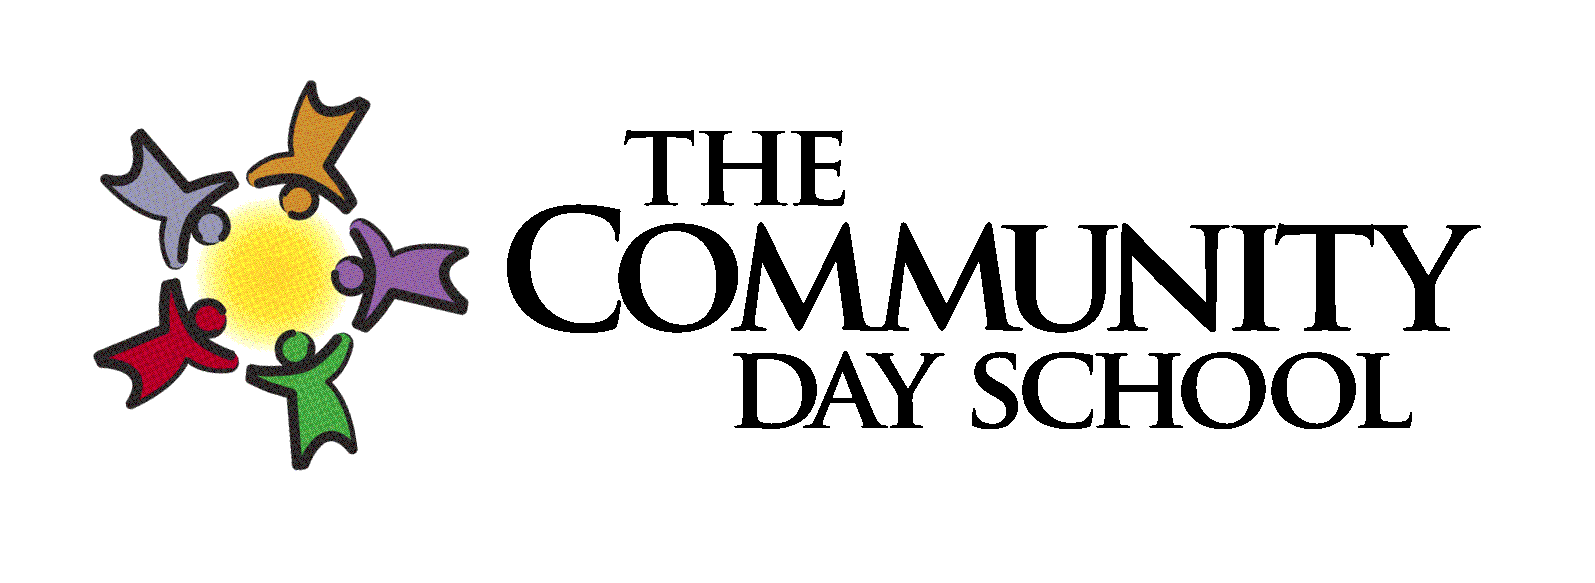 The Community Day School